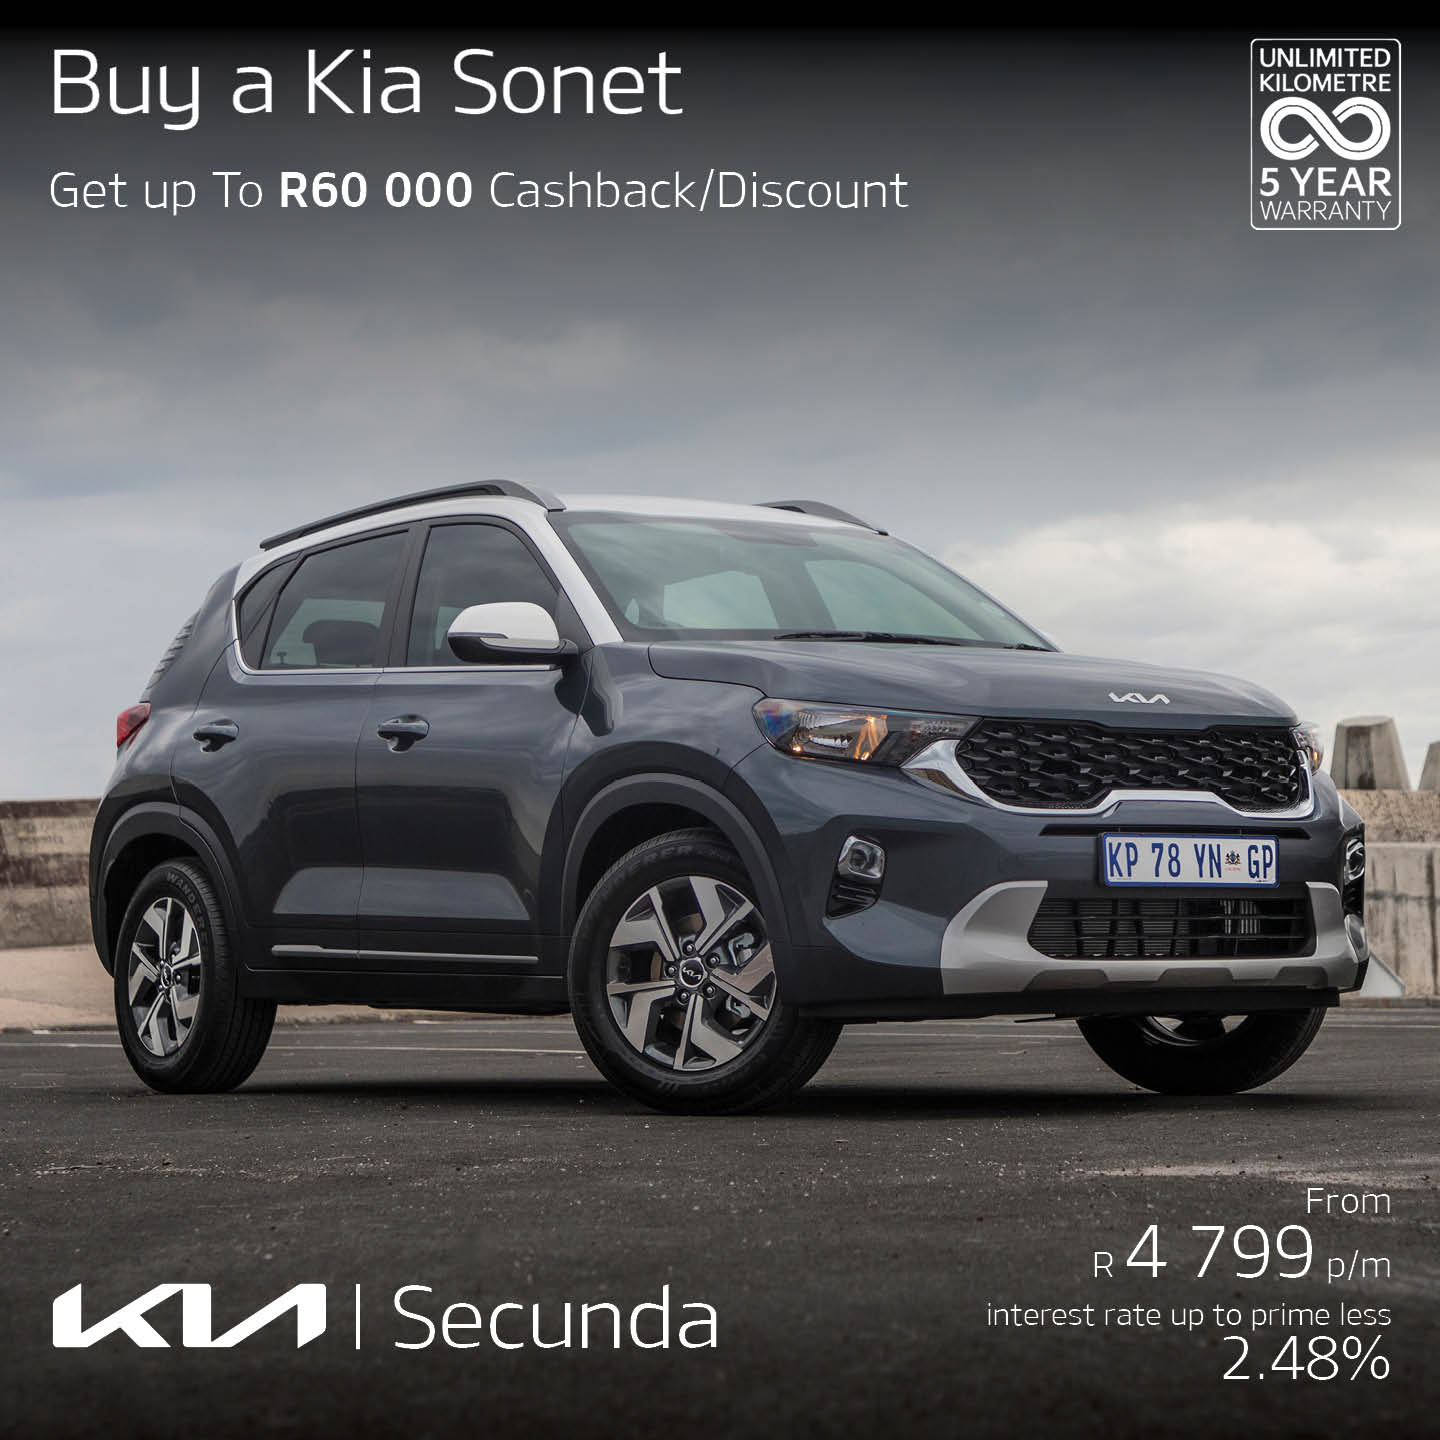 KIA Sonet image from Eastvaal Motors